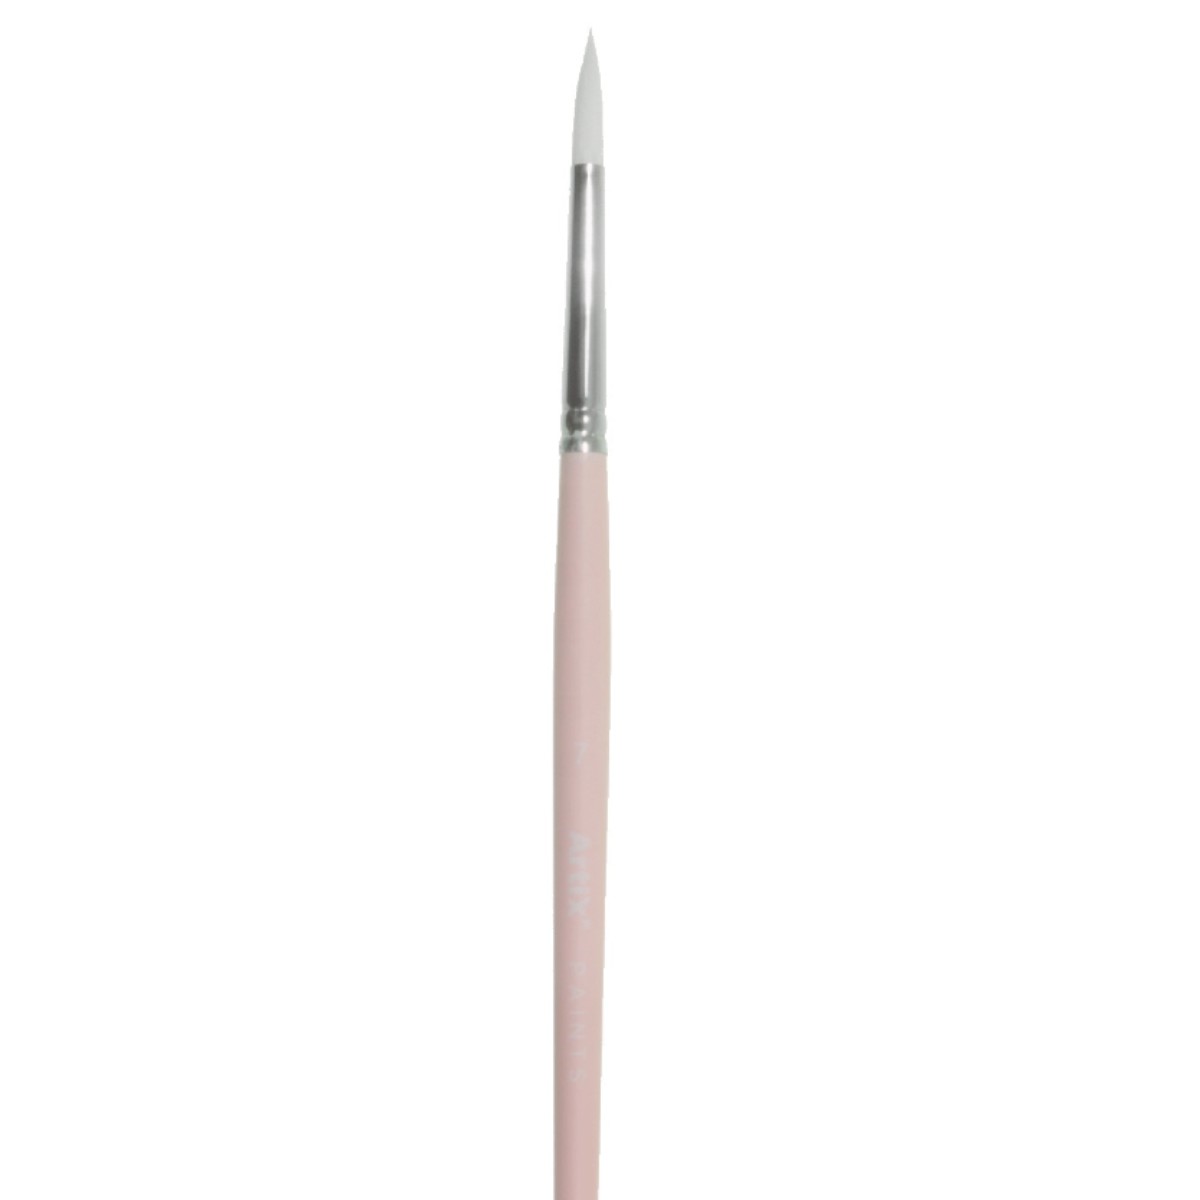 Pensula sintetica varf ascutit coada scurta Artix nr 7 PP399-02